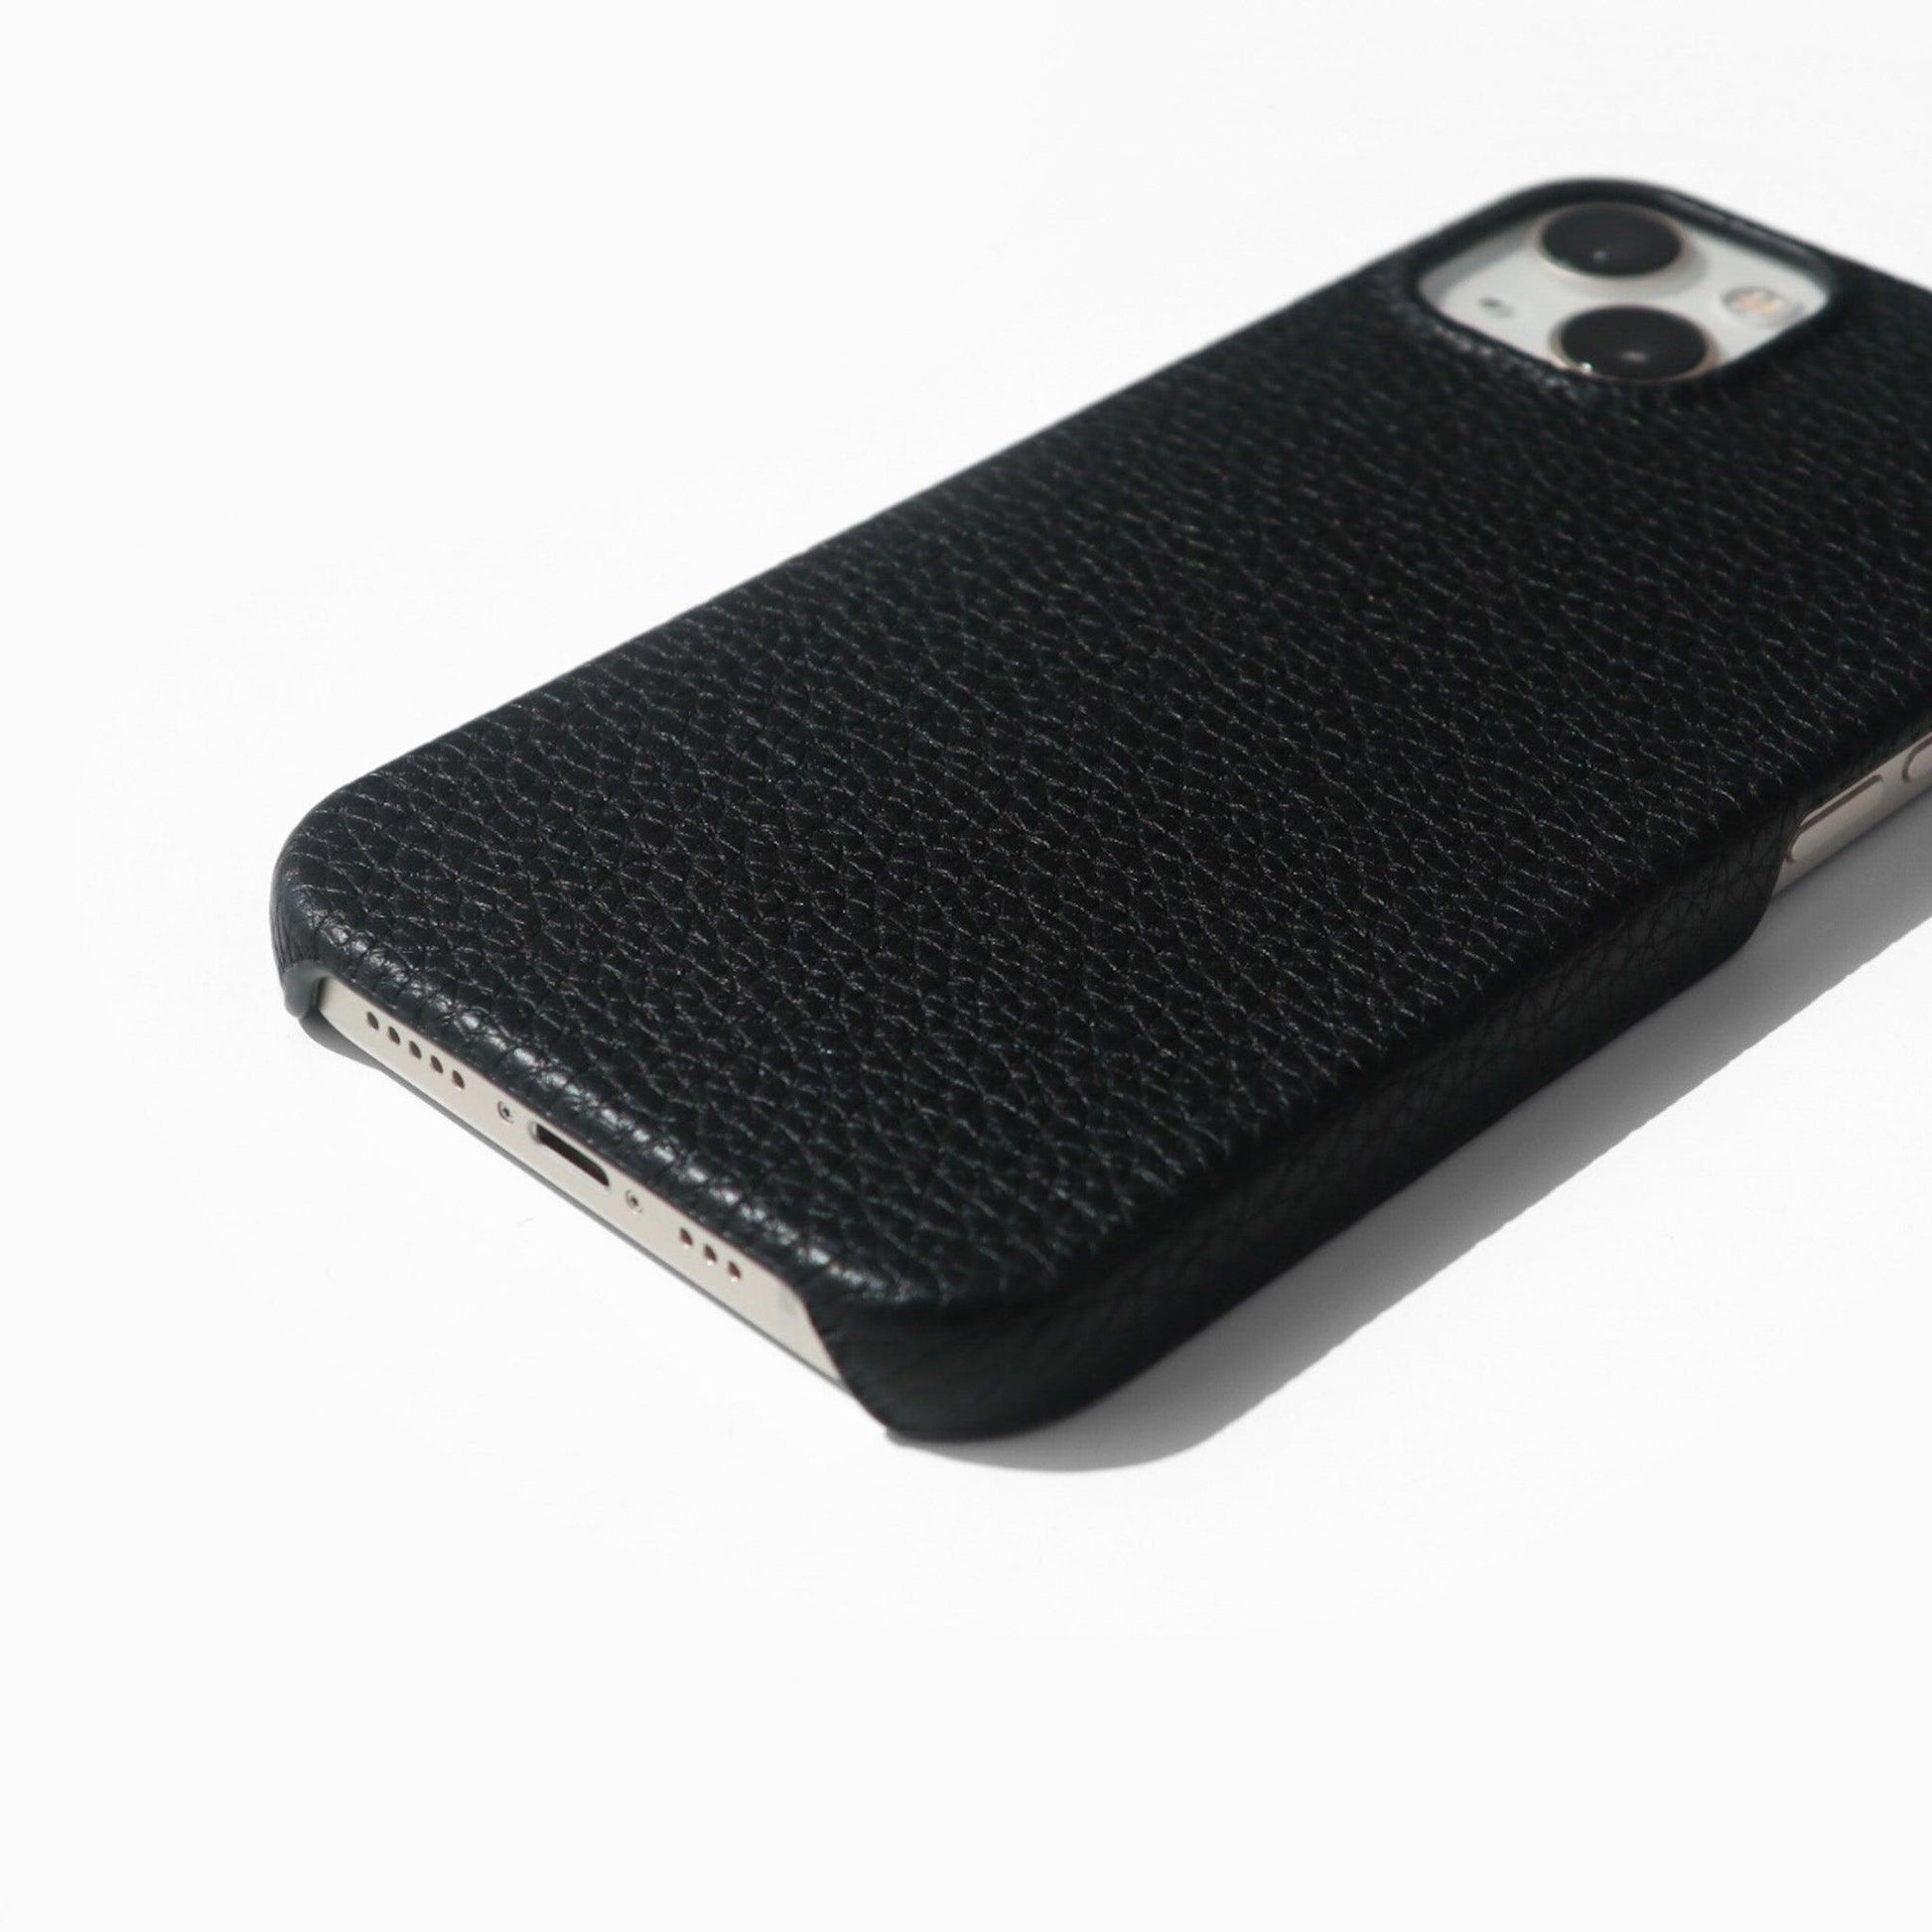 iPhone Thin Case - Gloss Black